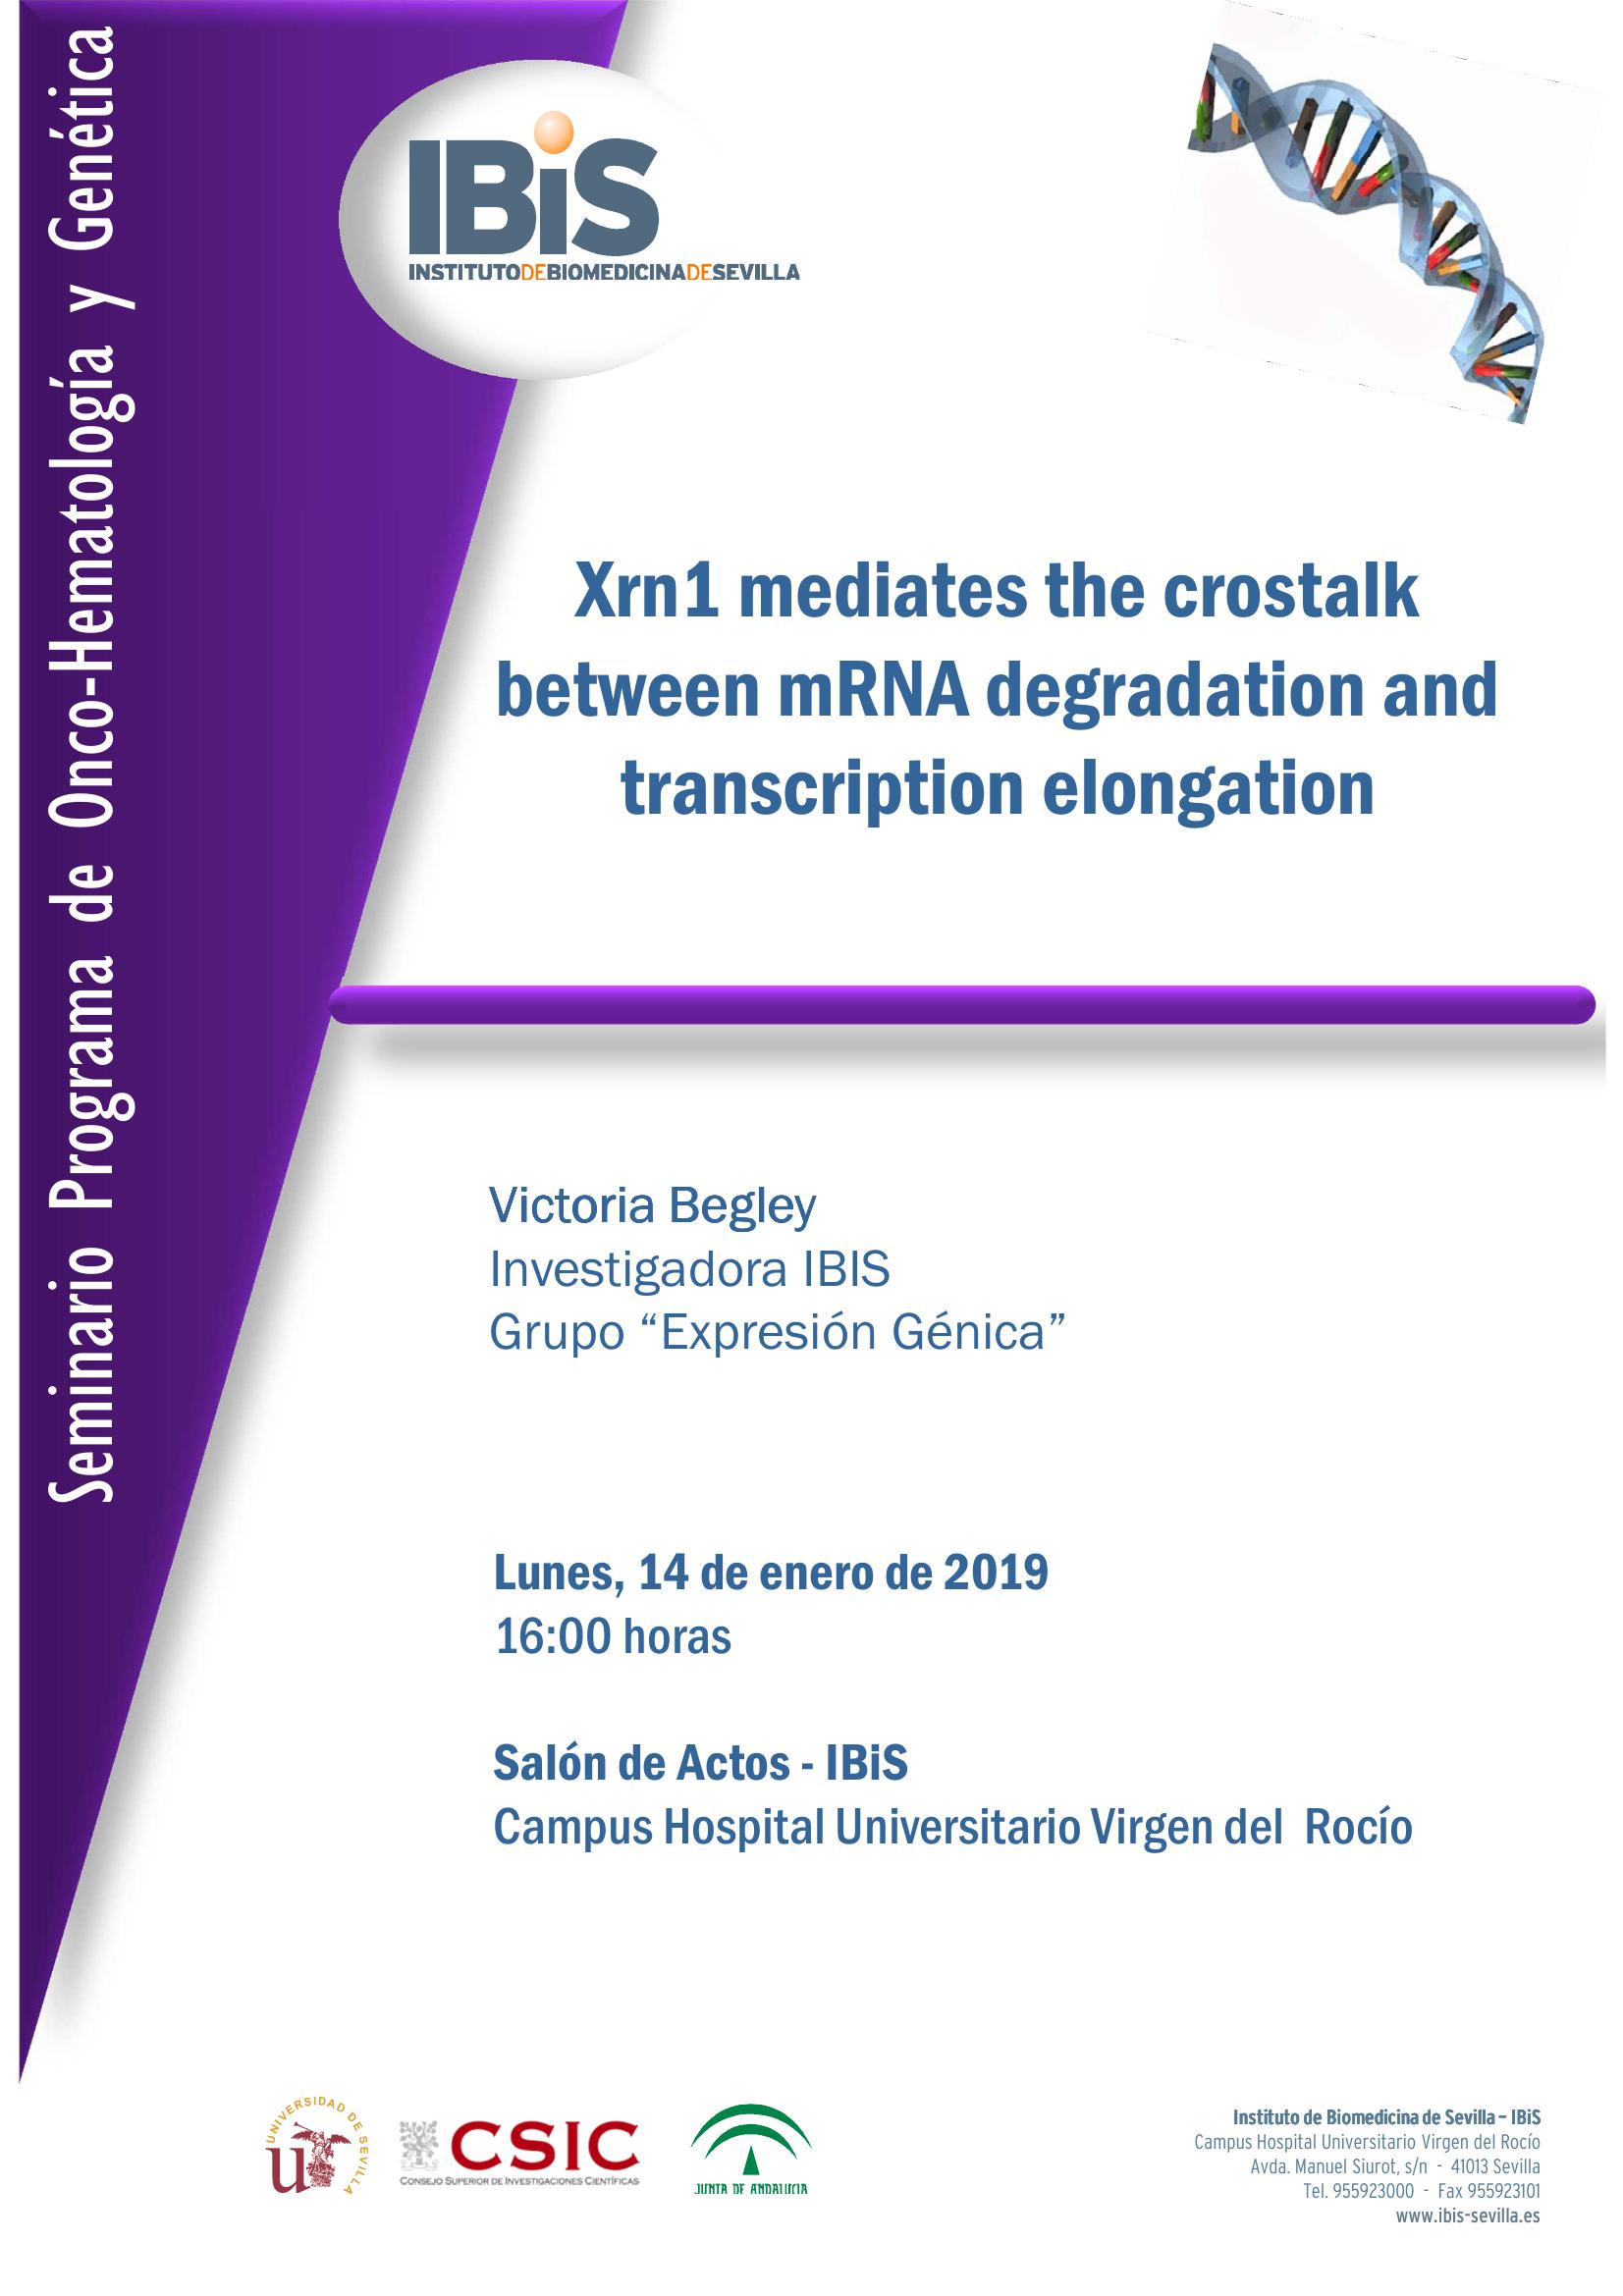 Poster: Xrn1 mediates the crostalk between mRNA degradation and transcription elongation